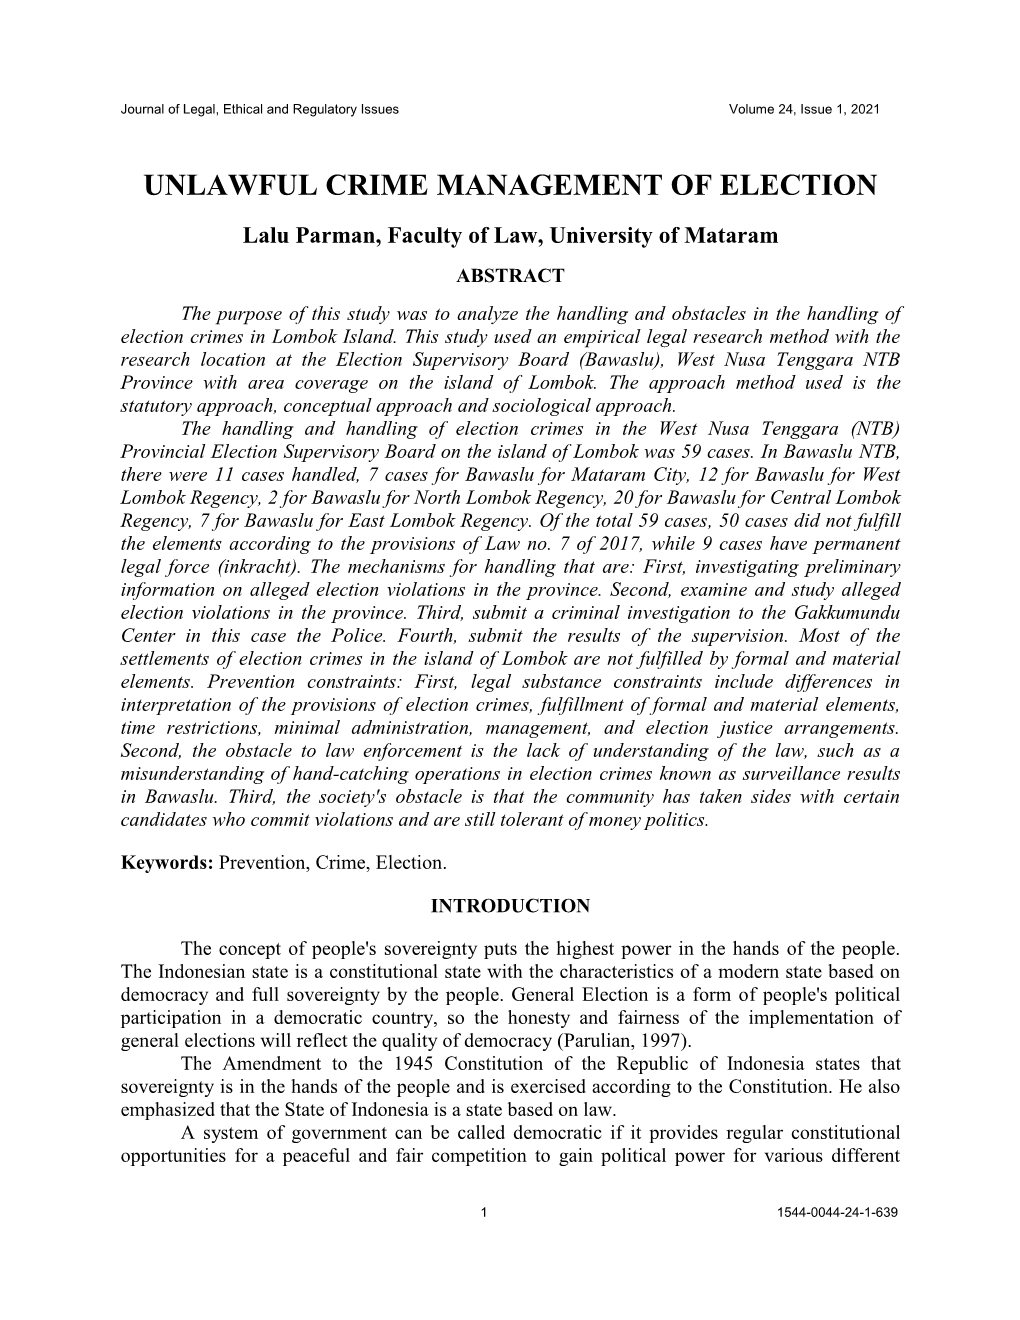 Unlawful Crime Management of Election